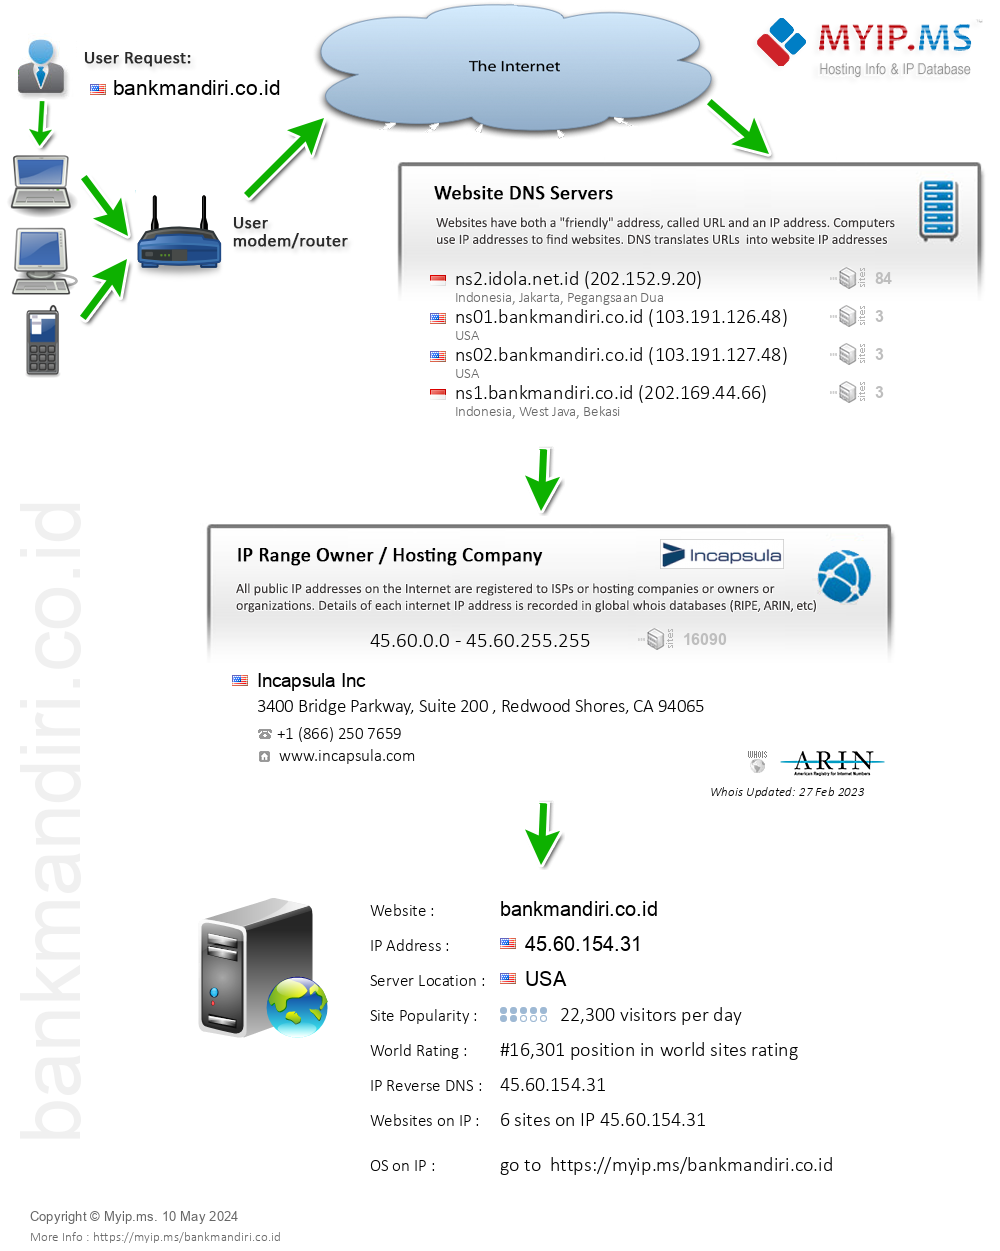 Bankmandiri.co.id - Website Hosting Visual IP Diagram